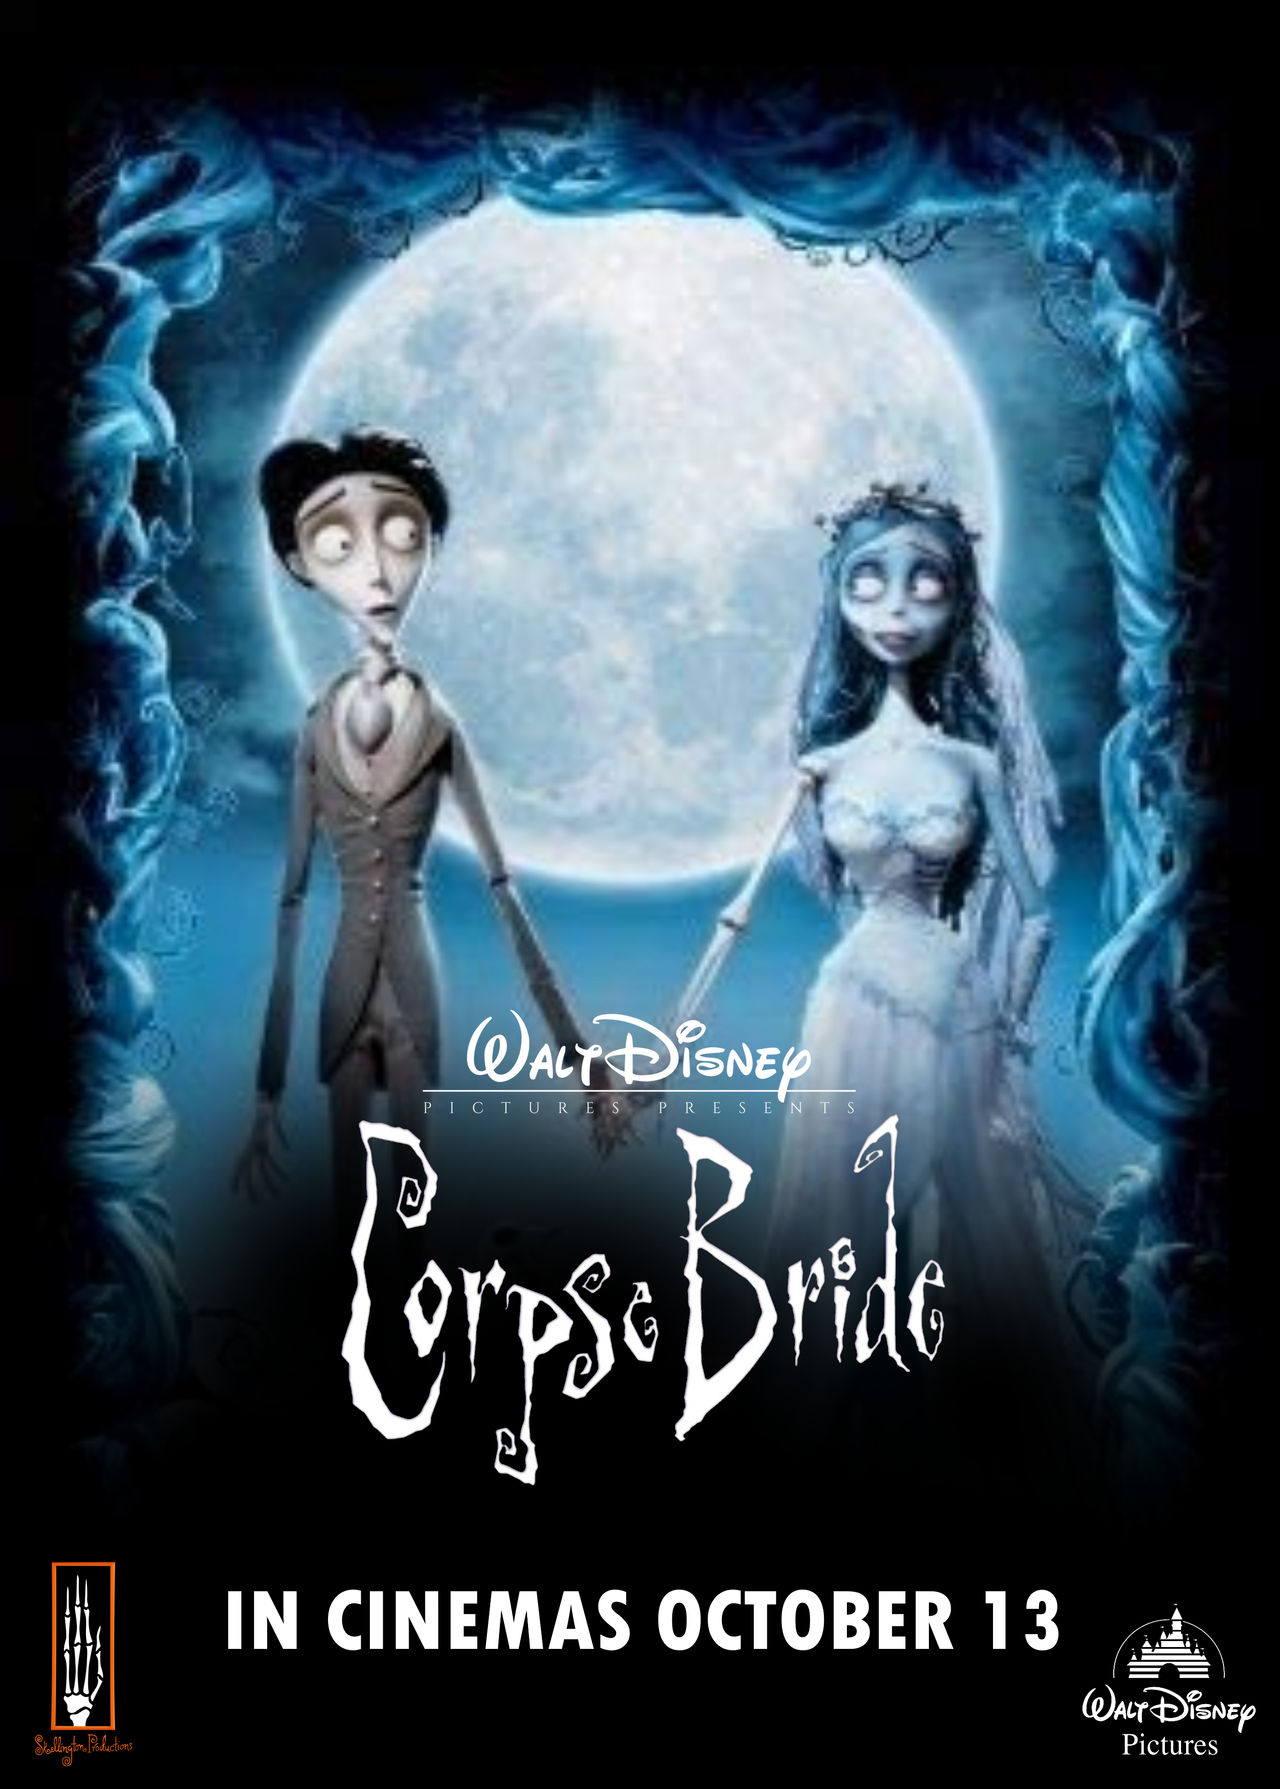 Corpse Bride as a Disney movie by Appleberries22 on DeviantArt